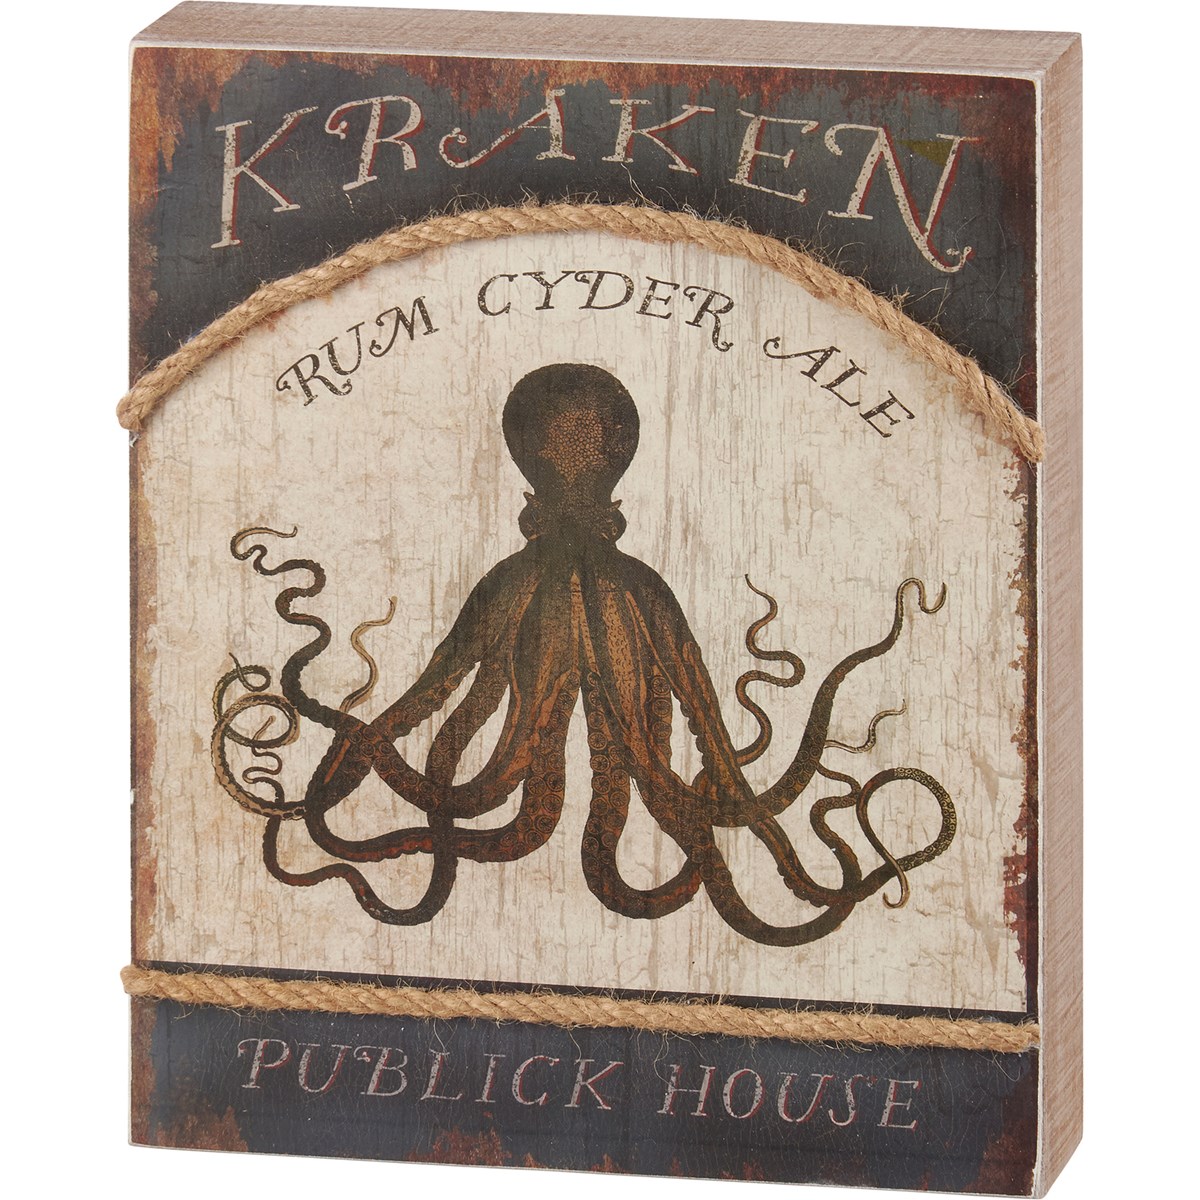 Kraken Publick House Box Sign - Wood, Paper, Rope